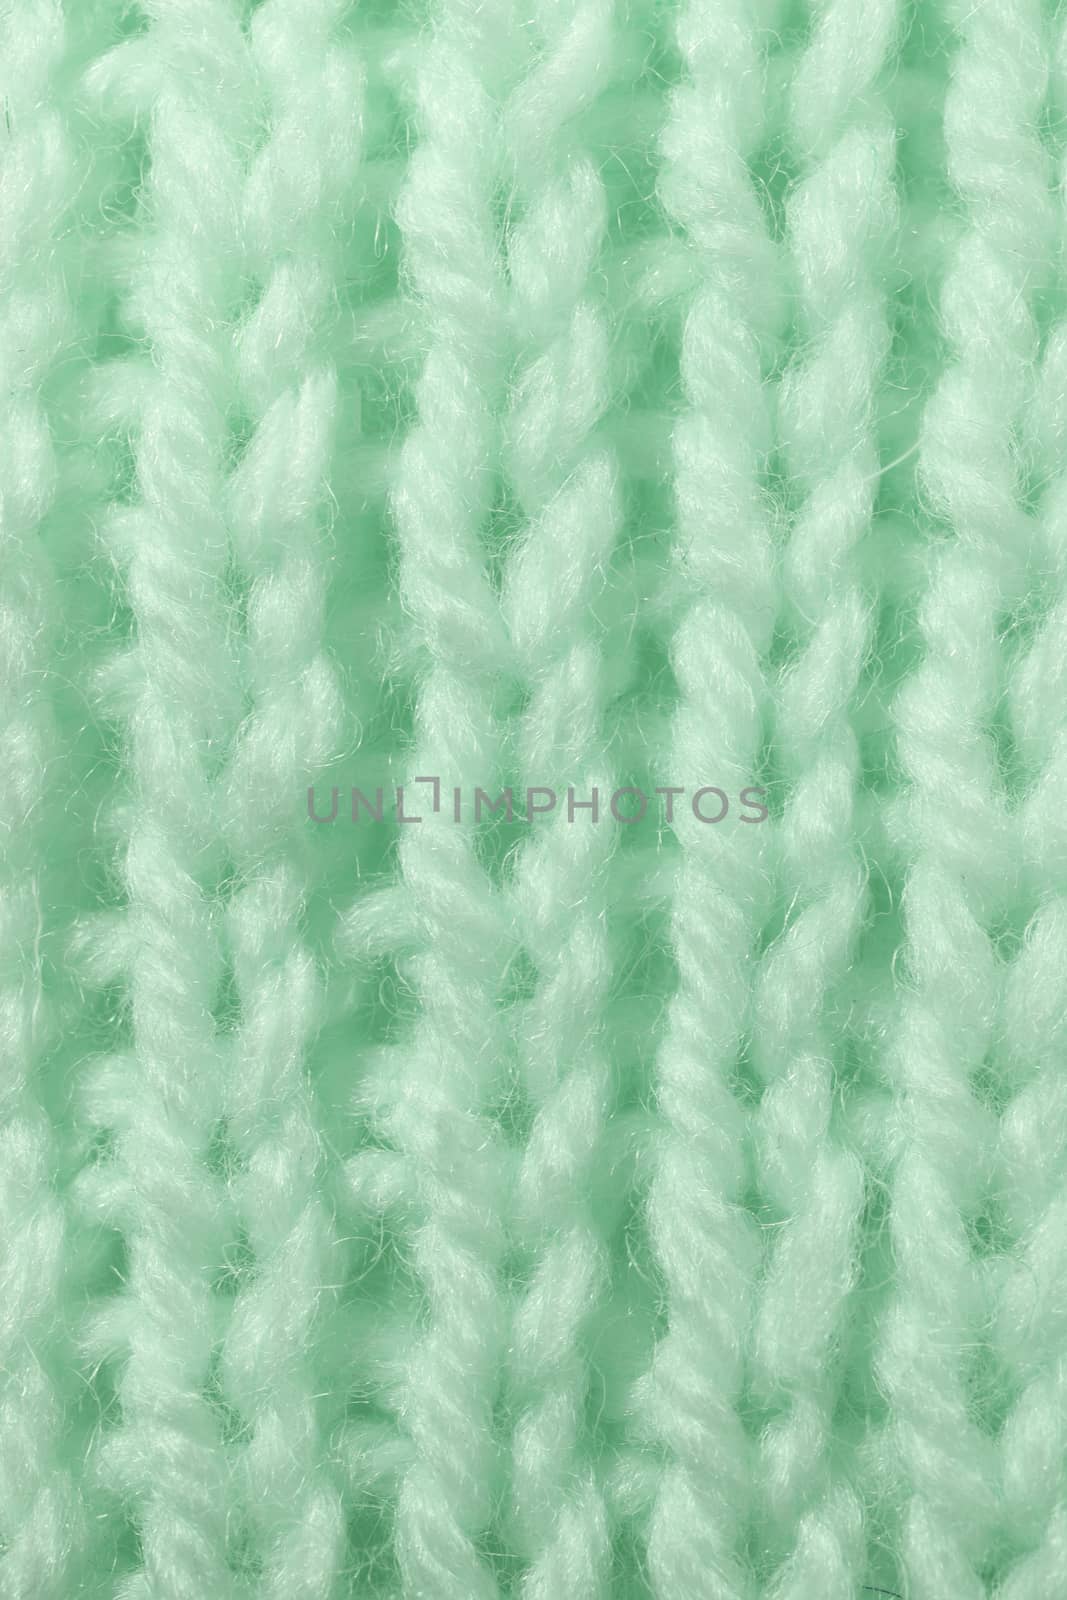 Light Green Wool Knitting Texture. Vertical Across Weaving Crochet Detailed Rows. Sweater Textile Background. Macro Closeup.